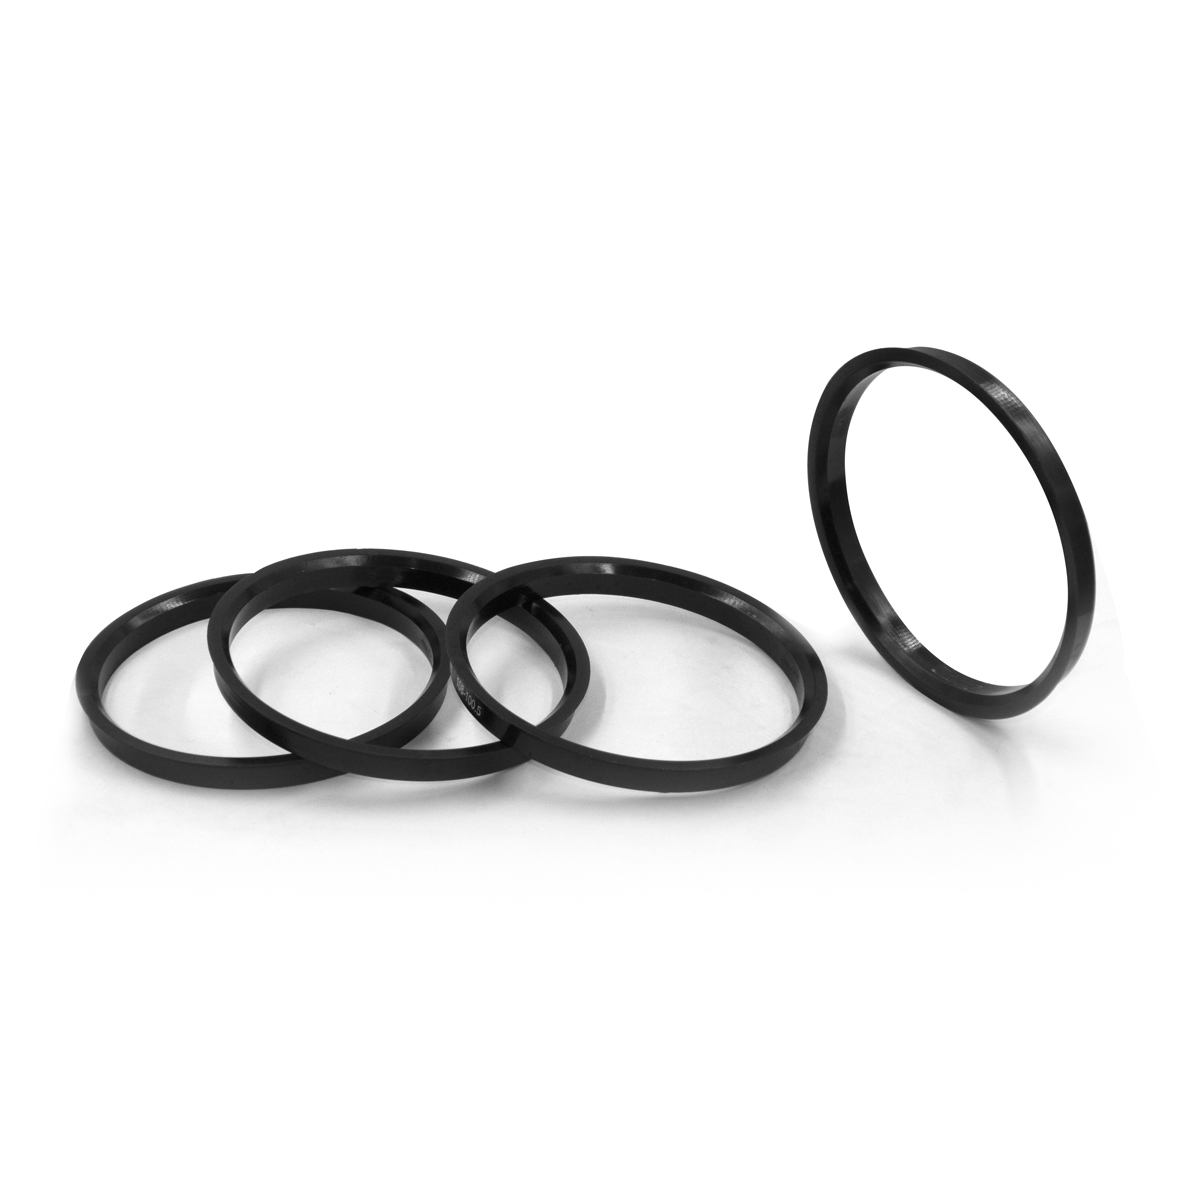 X AUTOHAUX Car Hub Centric Rings Wheel Bore Center 73.1 to 69.6mm 4pcs Black Plastic 